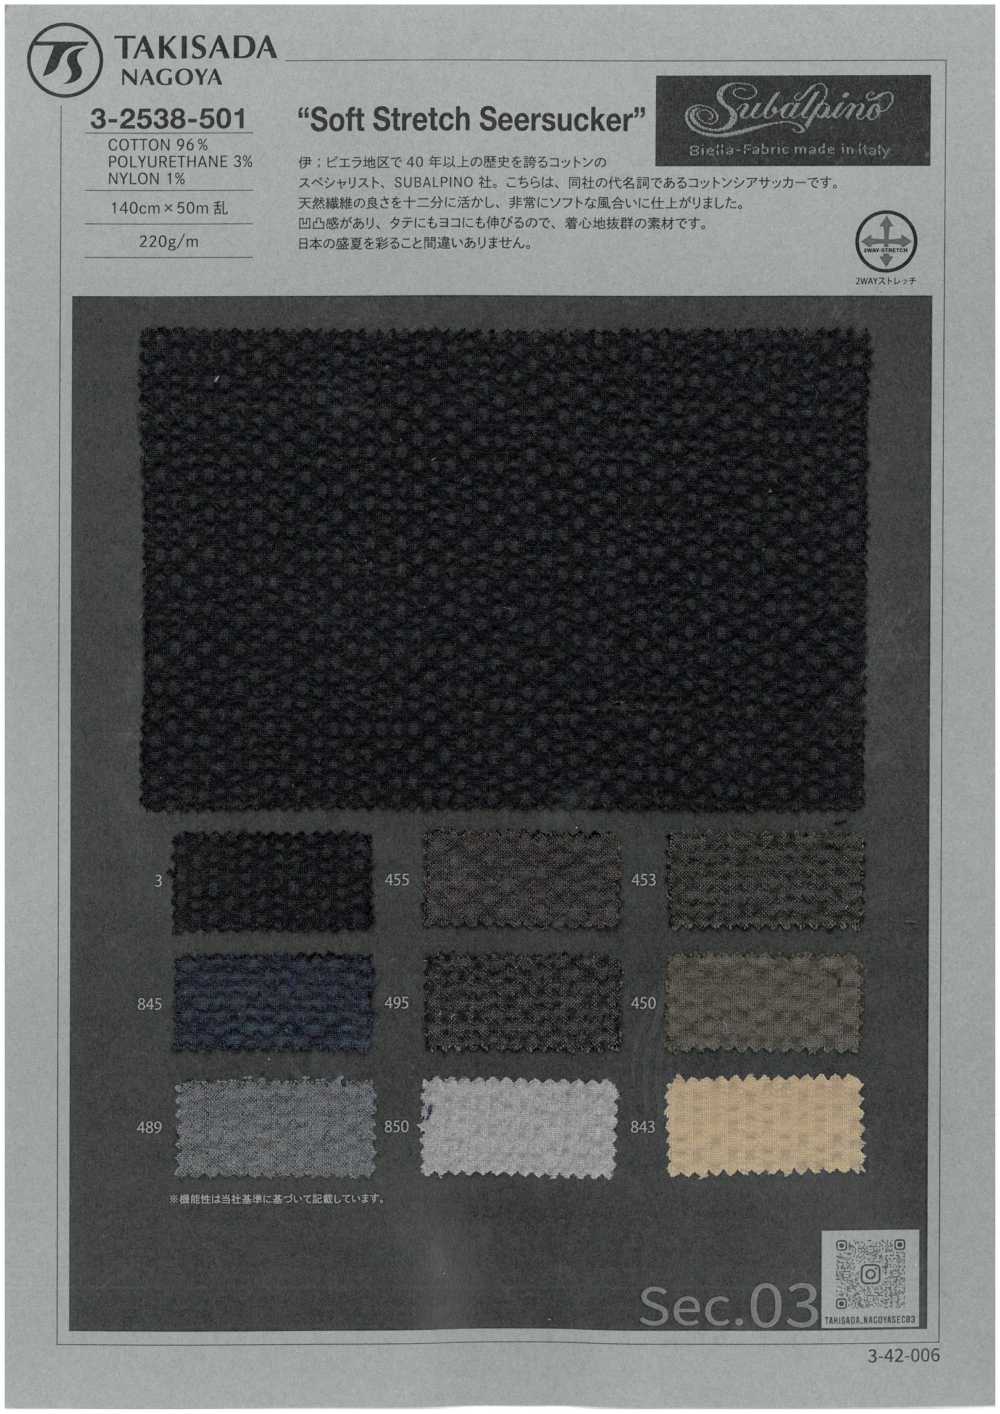 3-2538-501 SUBALPINO Seersucker Extensible Doux Sans Motif[Fabrication De Textile] Takisada Nagoya